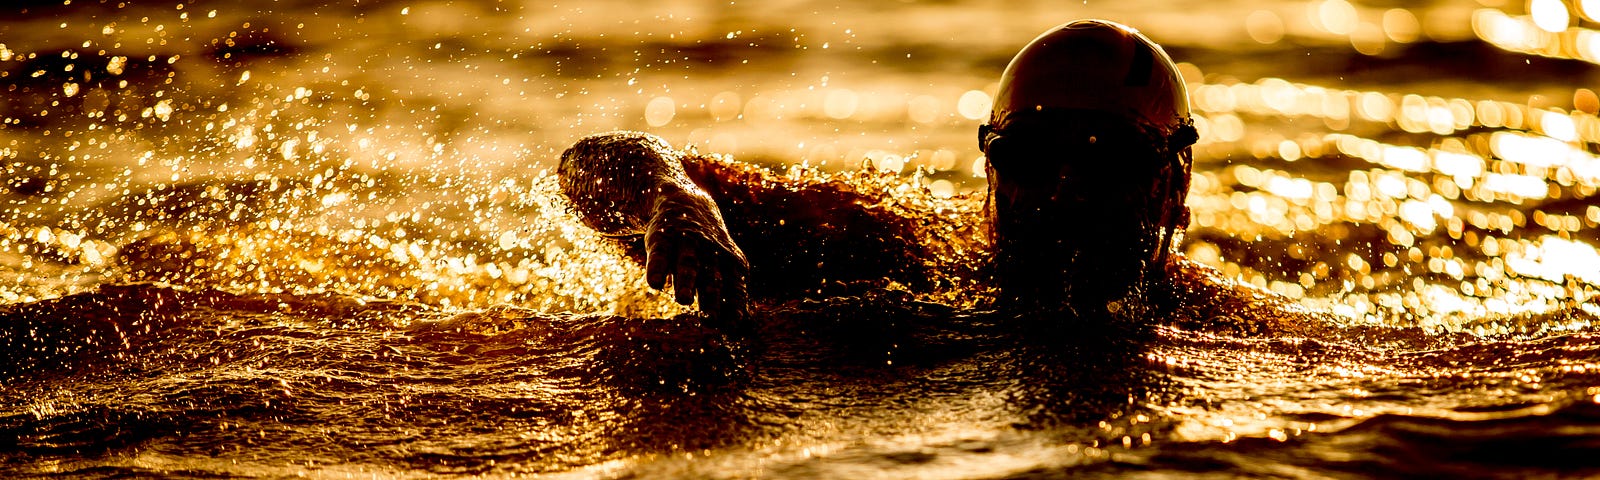 An endurance swimmer demonstrating perseverance.